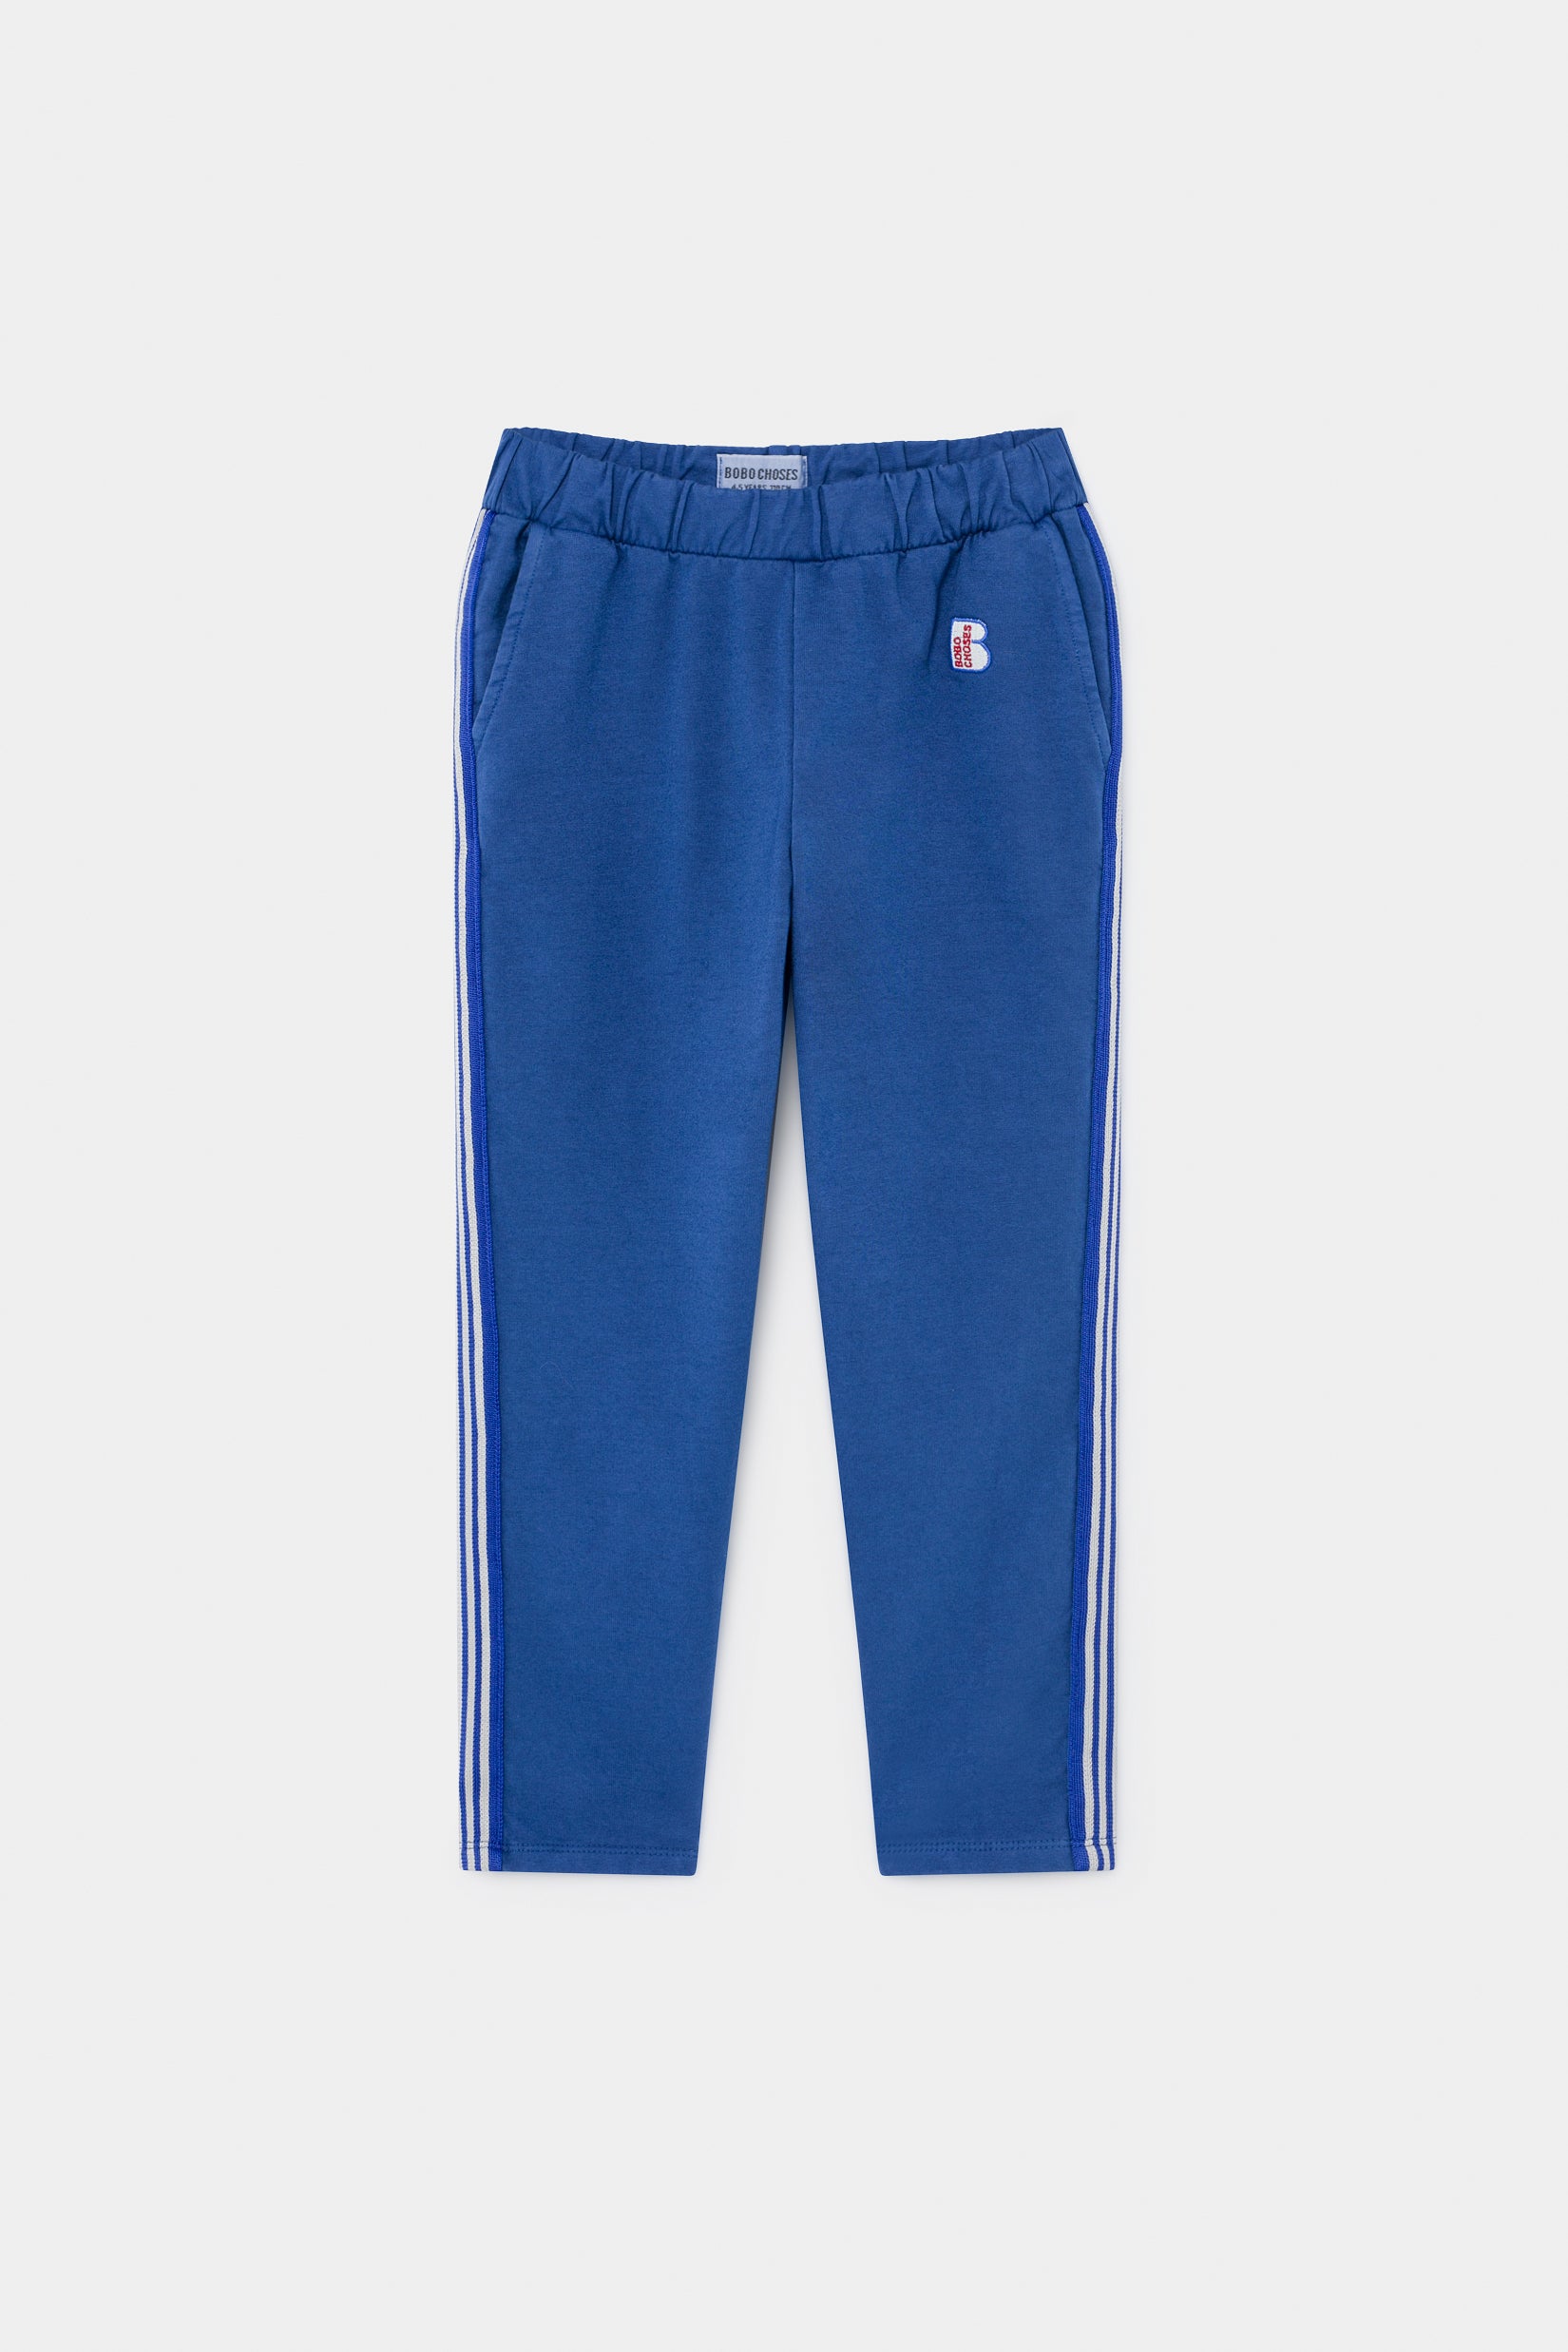 Boys Blue Jogging Trousers